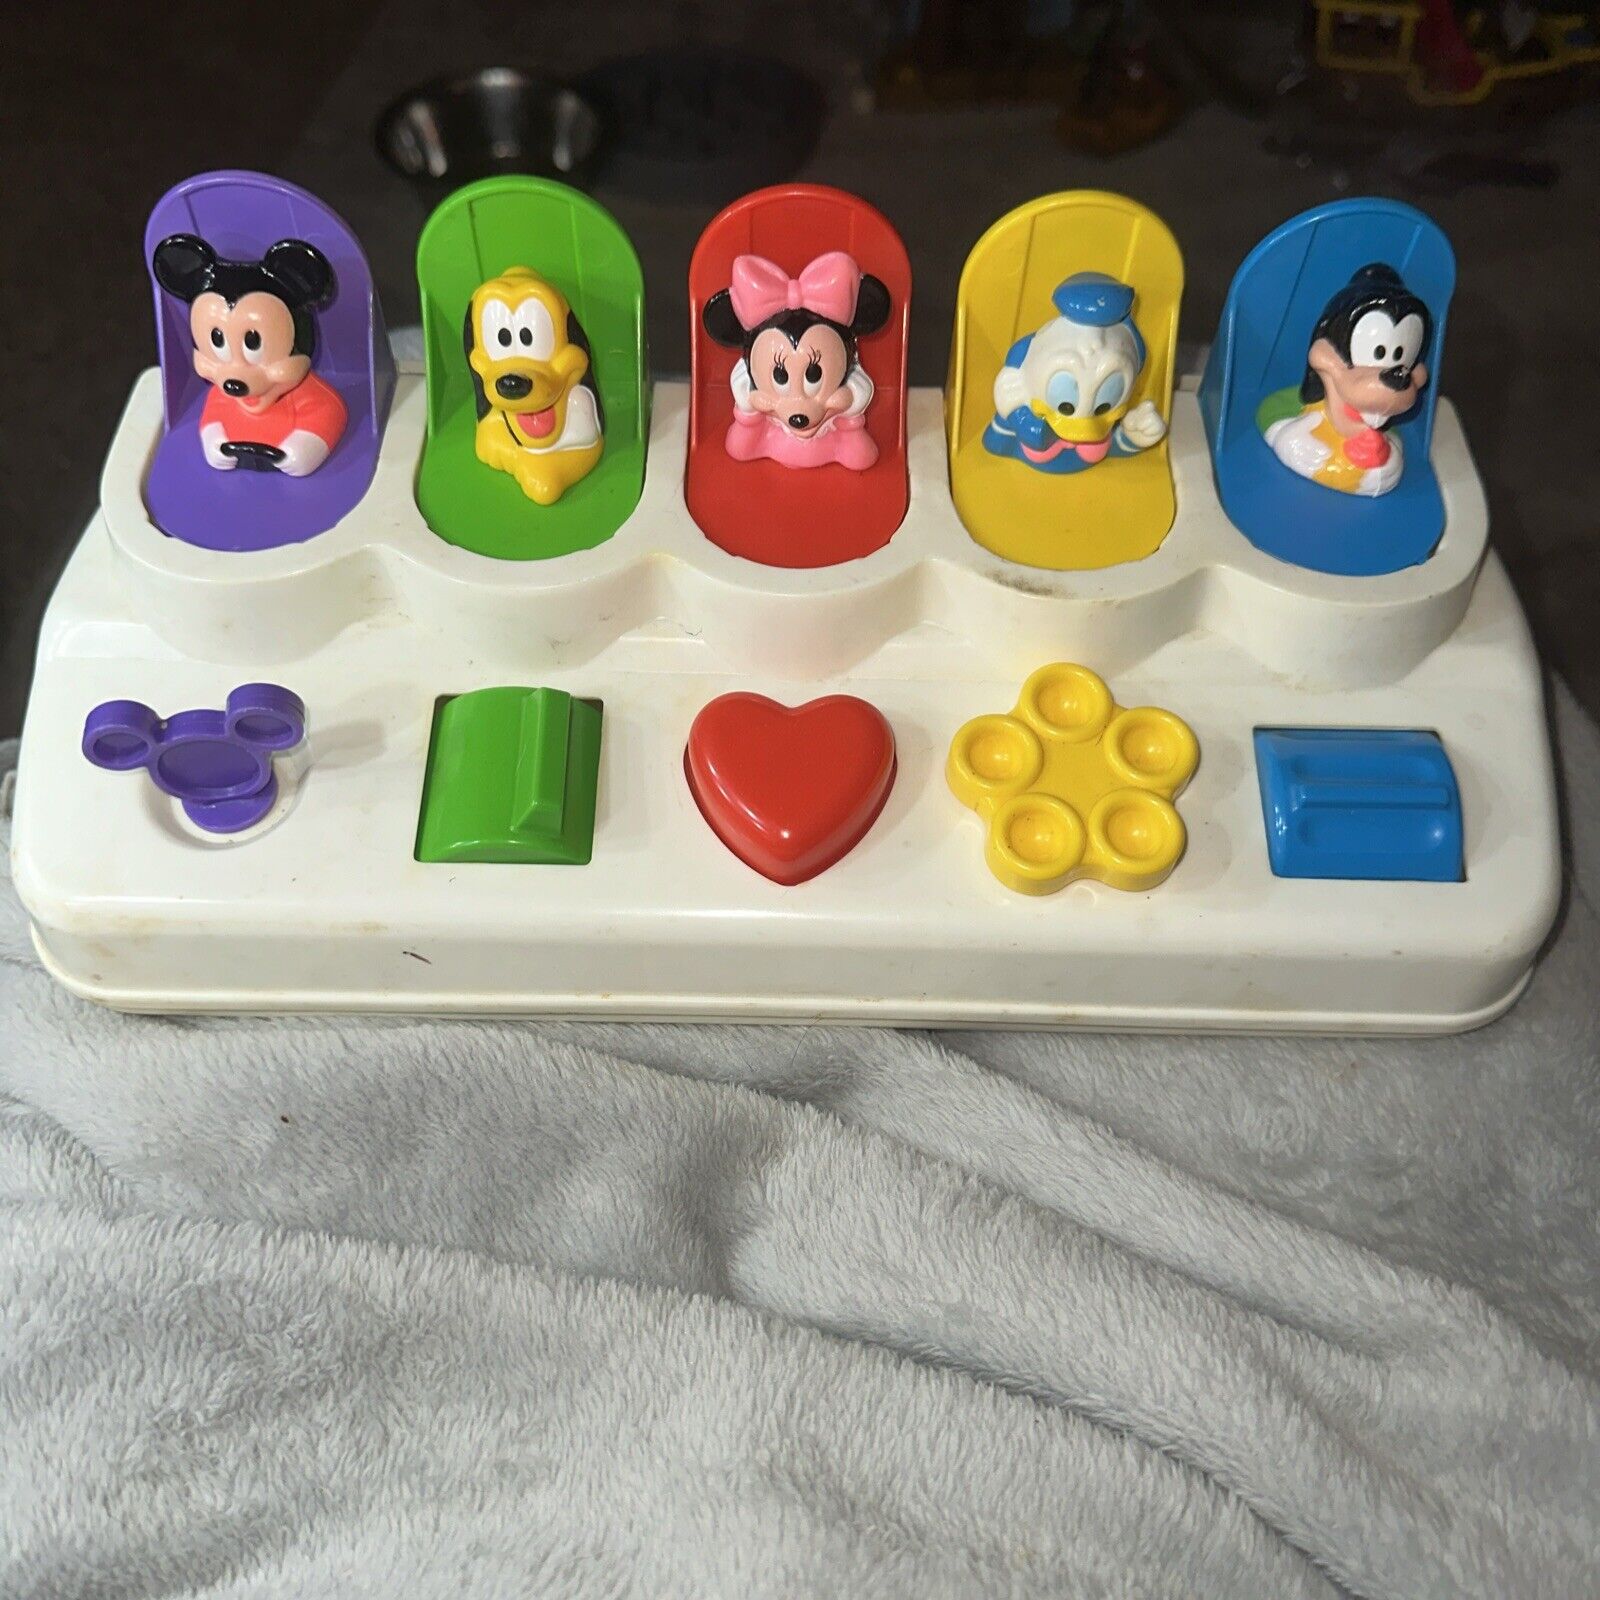 Vintage Disney Mattel Mickey Mouse Friends Pop-Up Children’s Toy